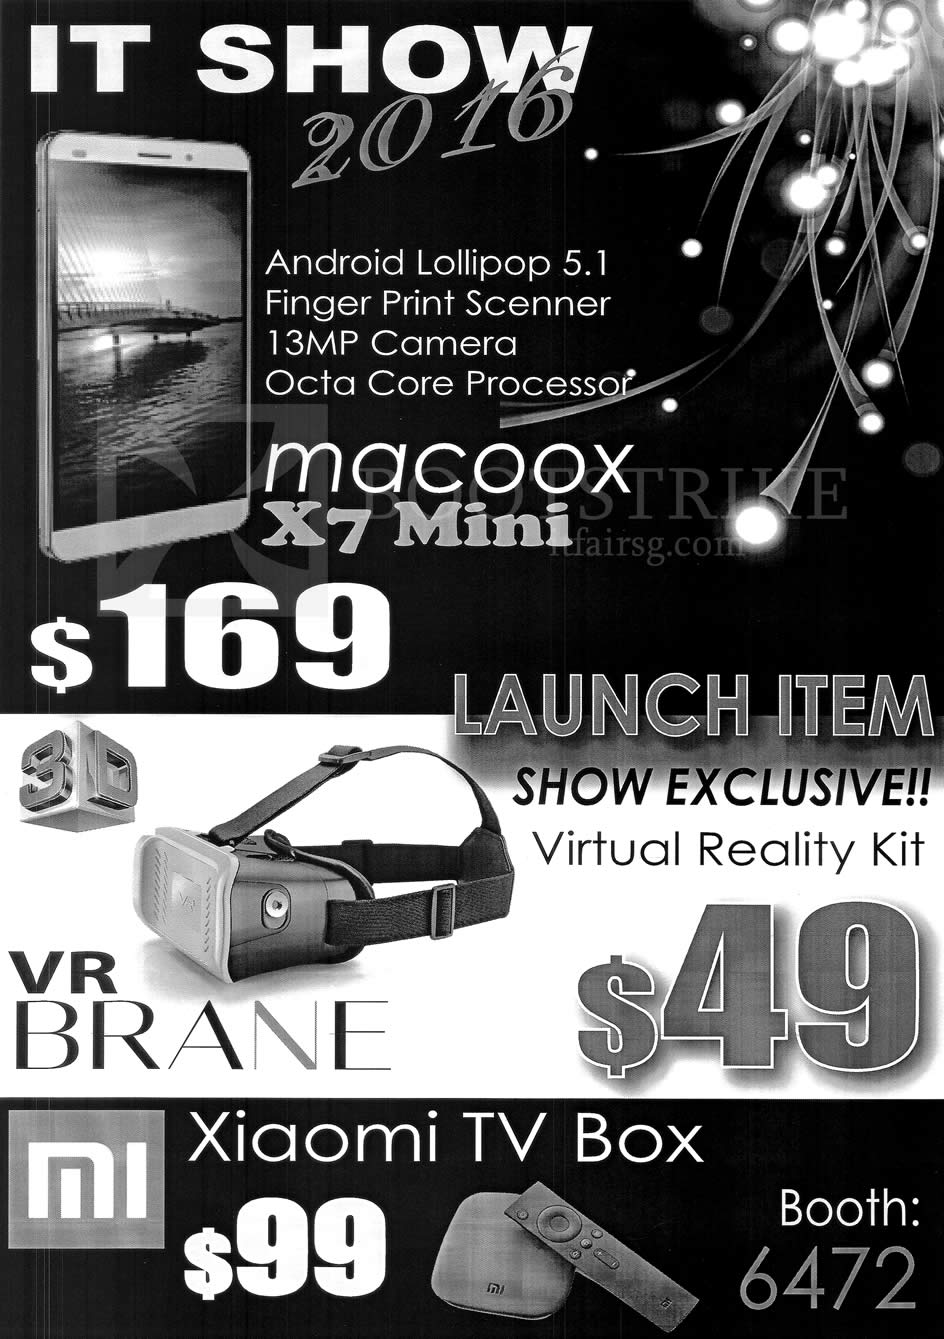 IT SHOW 2016 price list image brochure of Nasa Mi Macoox X7 Mini, Virtual Reality Kit, VR Brane, Xiaomi TV Box